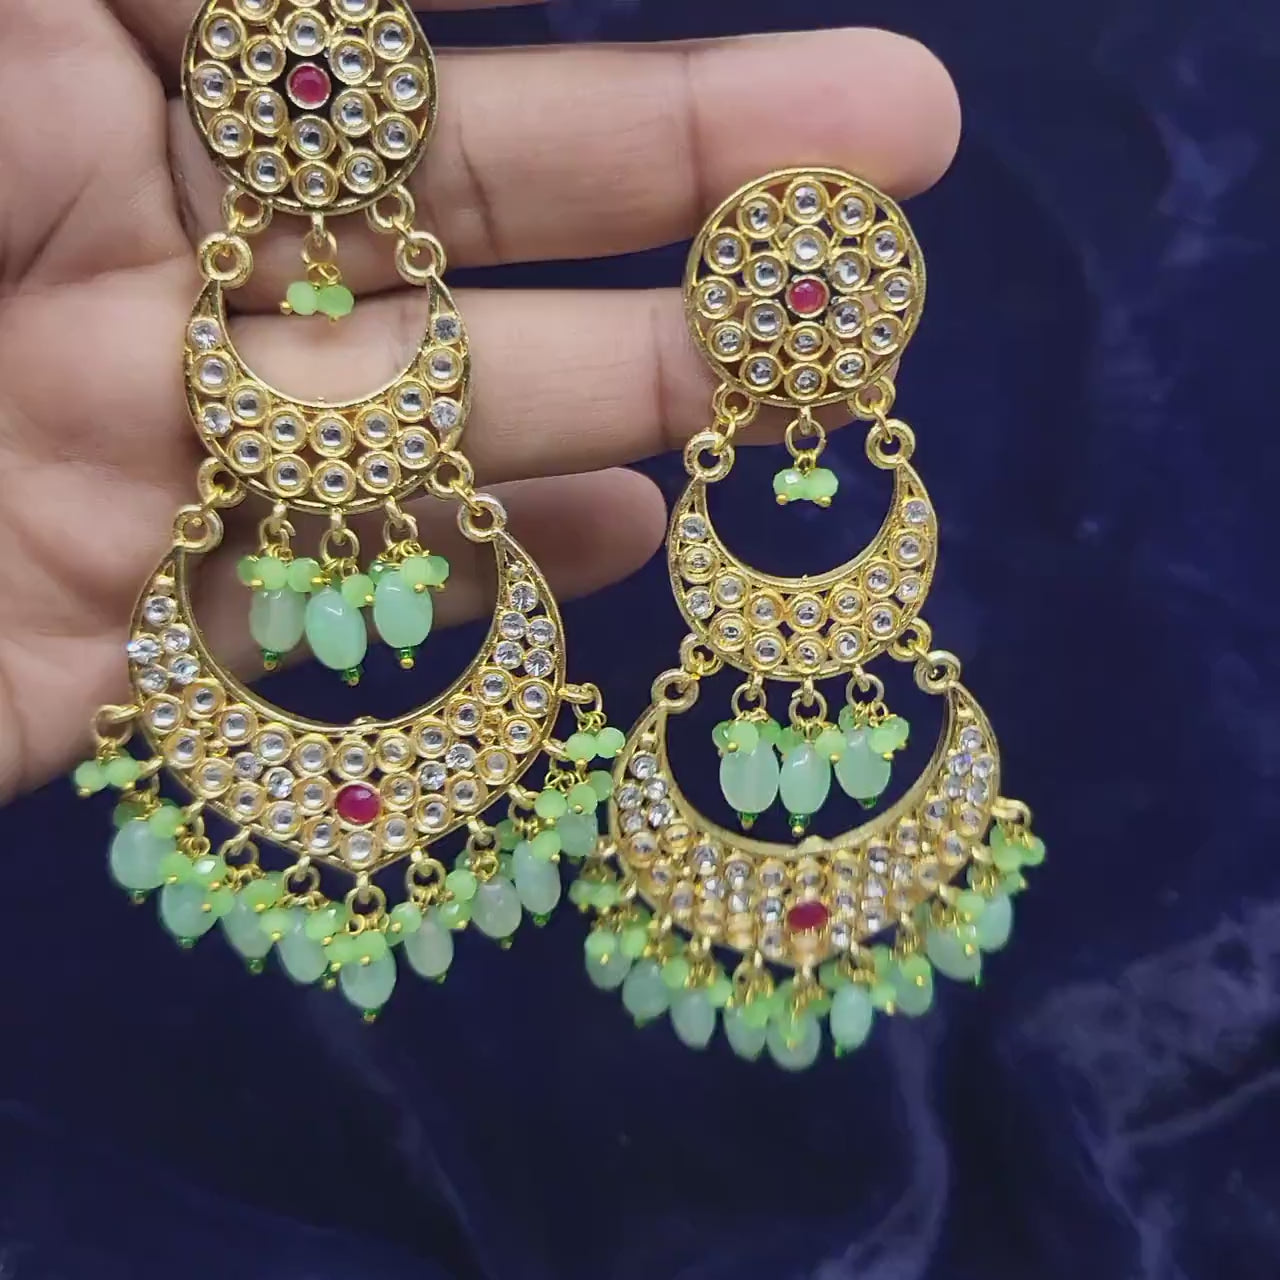 Big kundan chandbali earrings | Gold Plated red kundan chandbali | Ind |  Etsy earrings, Chandbali earrings, Peach earrings